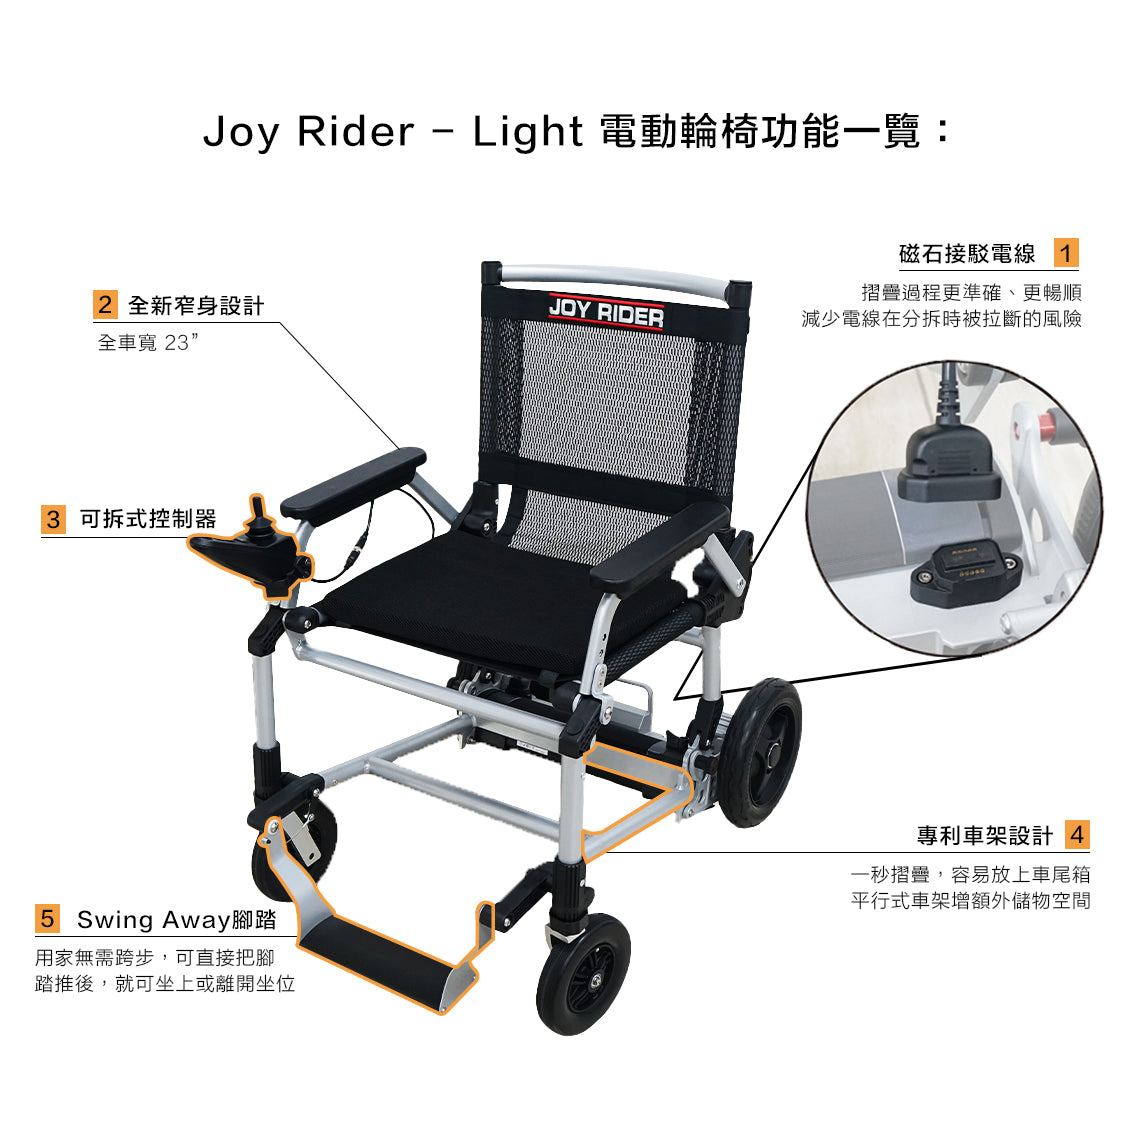 Joy Rider Light wheelchair